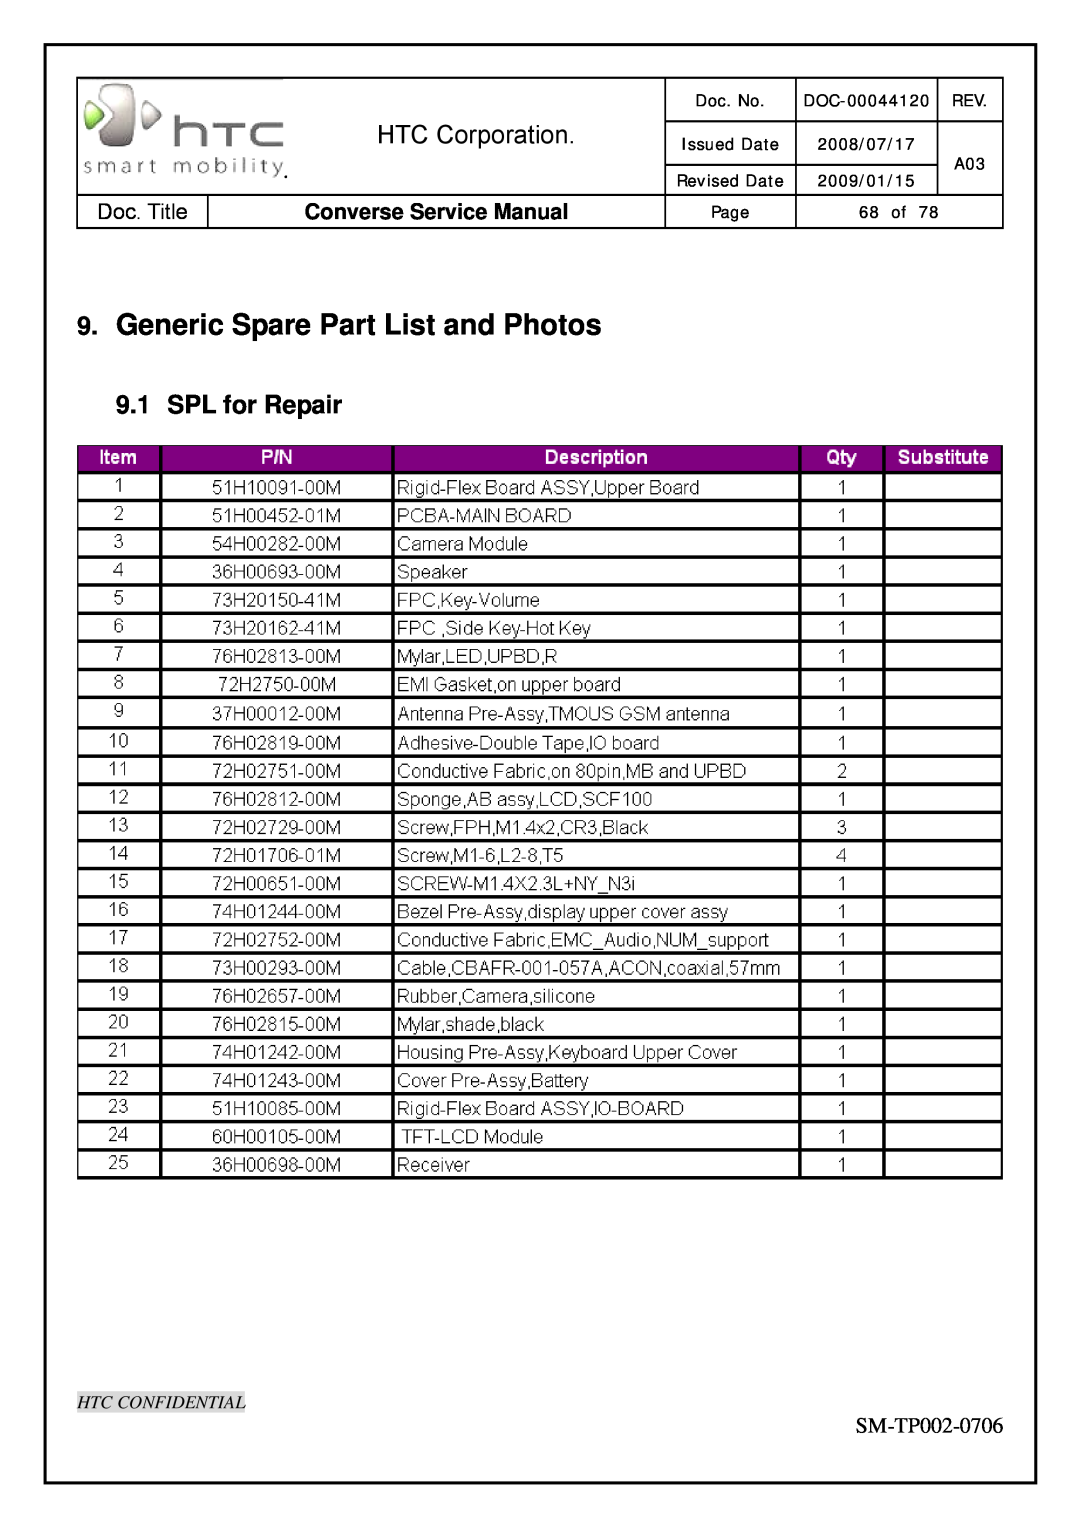 HTC SM-TP002-0706 Generic Spare Part List and Photos, SPL for Repair, HTC Corporation, Converse Service Manual, Doc. No 